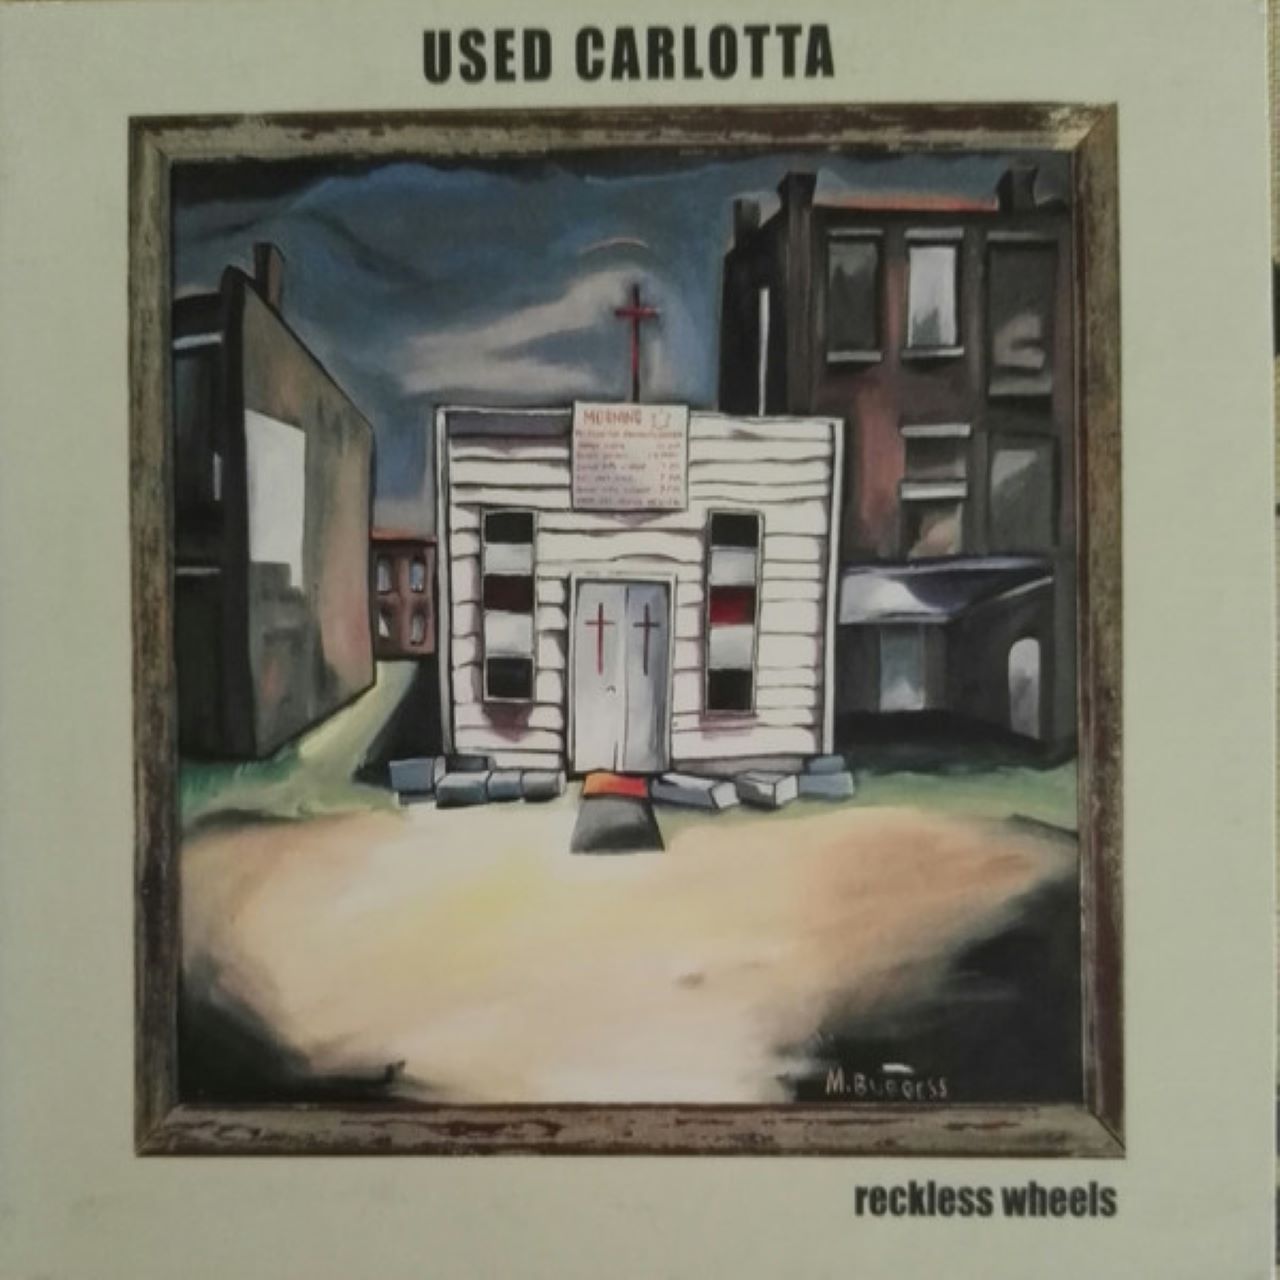 Used Carlotta - Reckless Wheels cover album